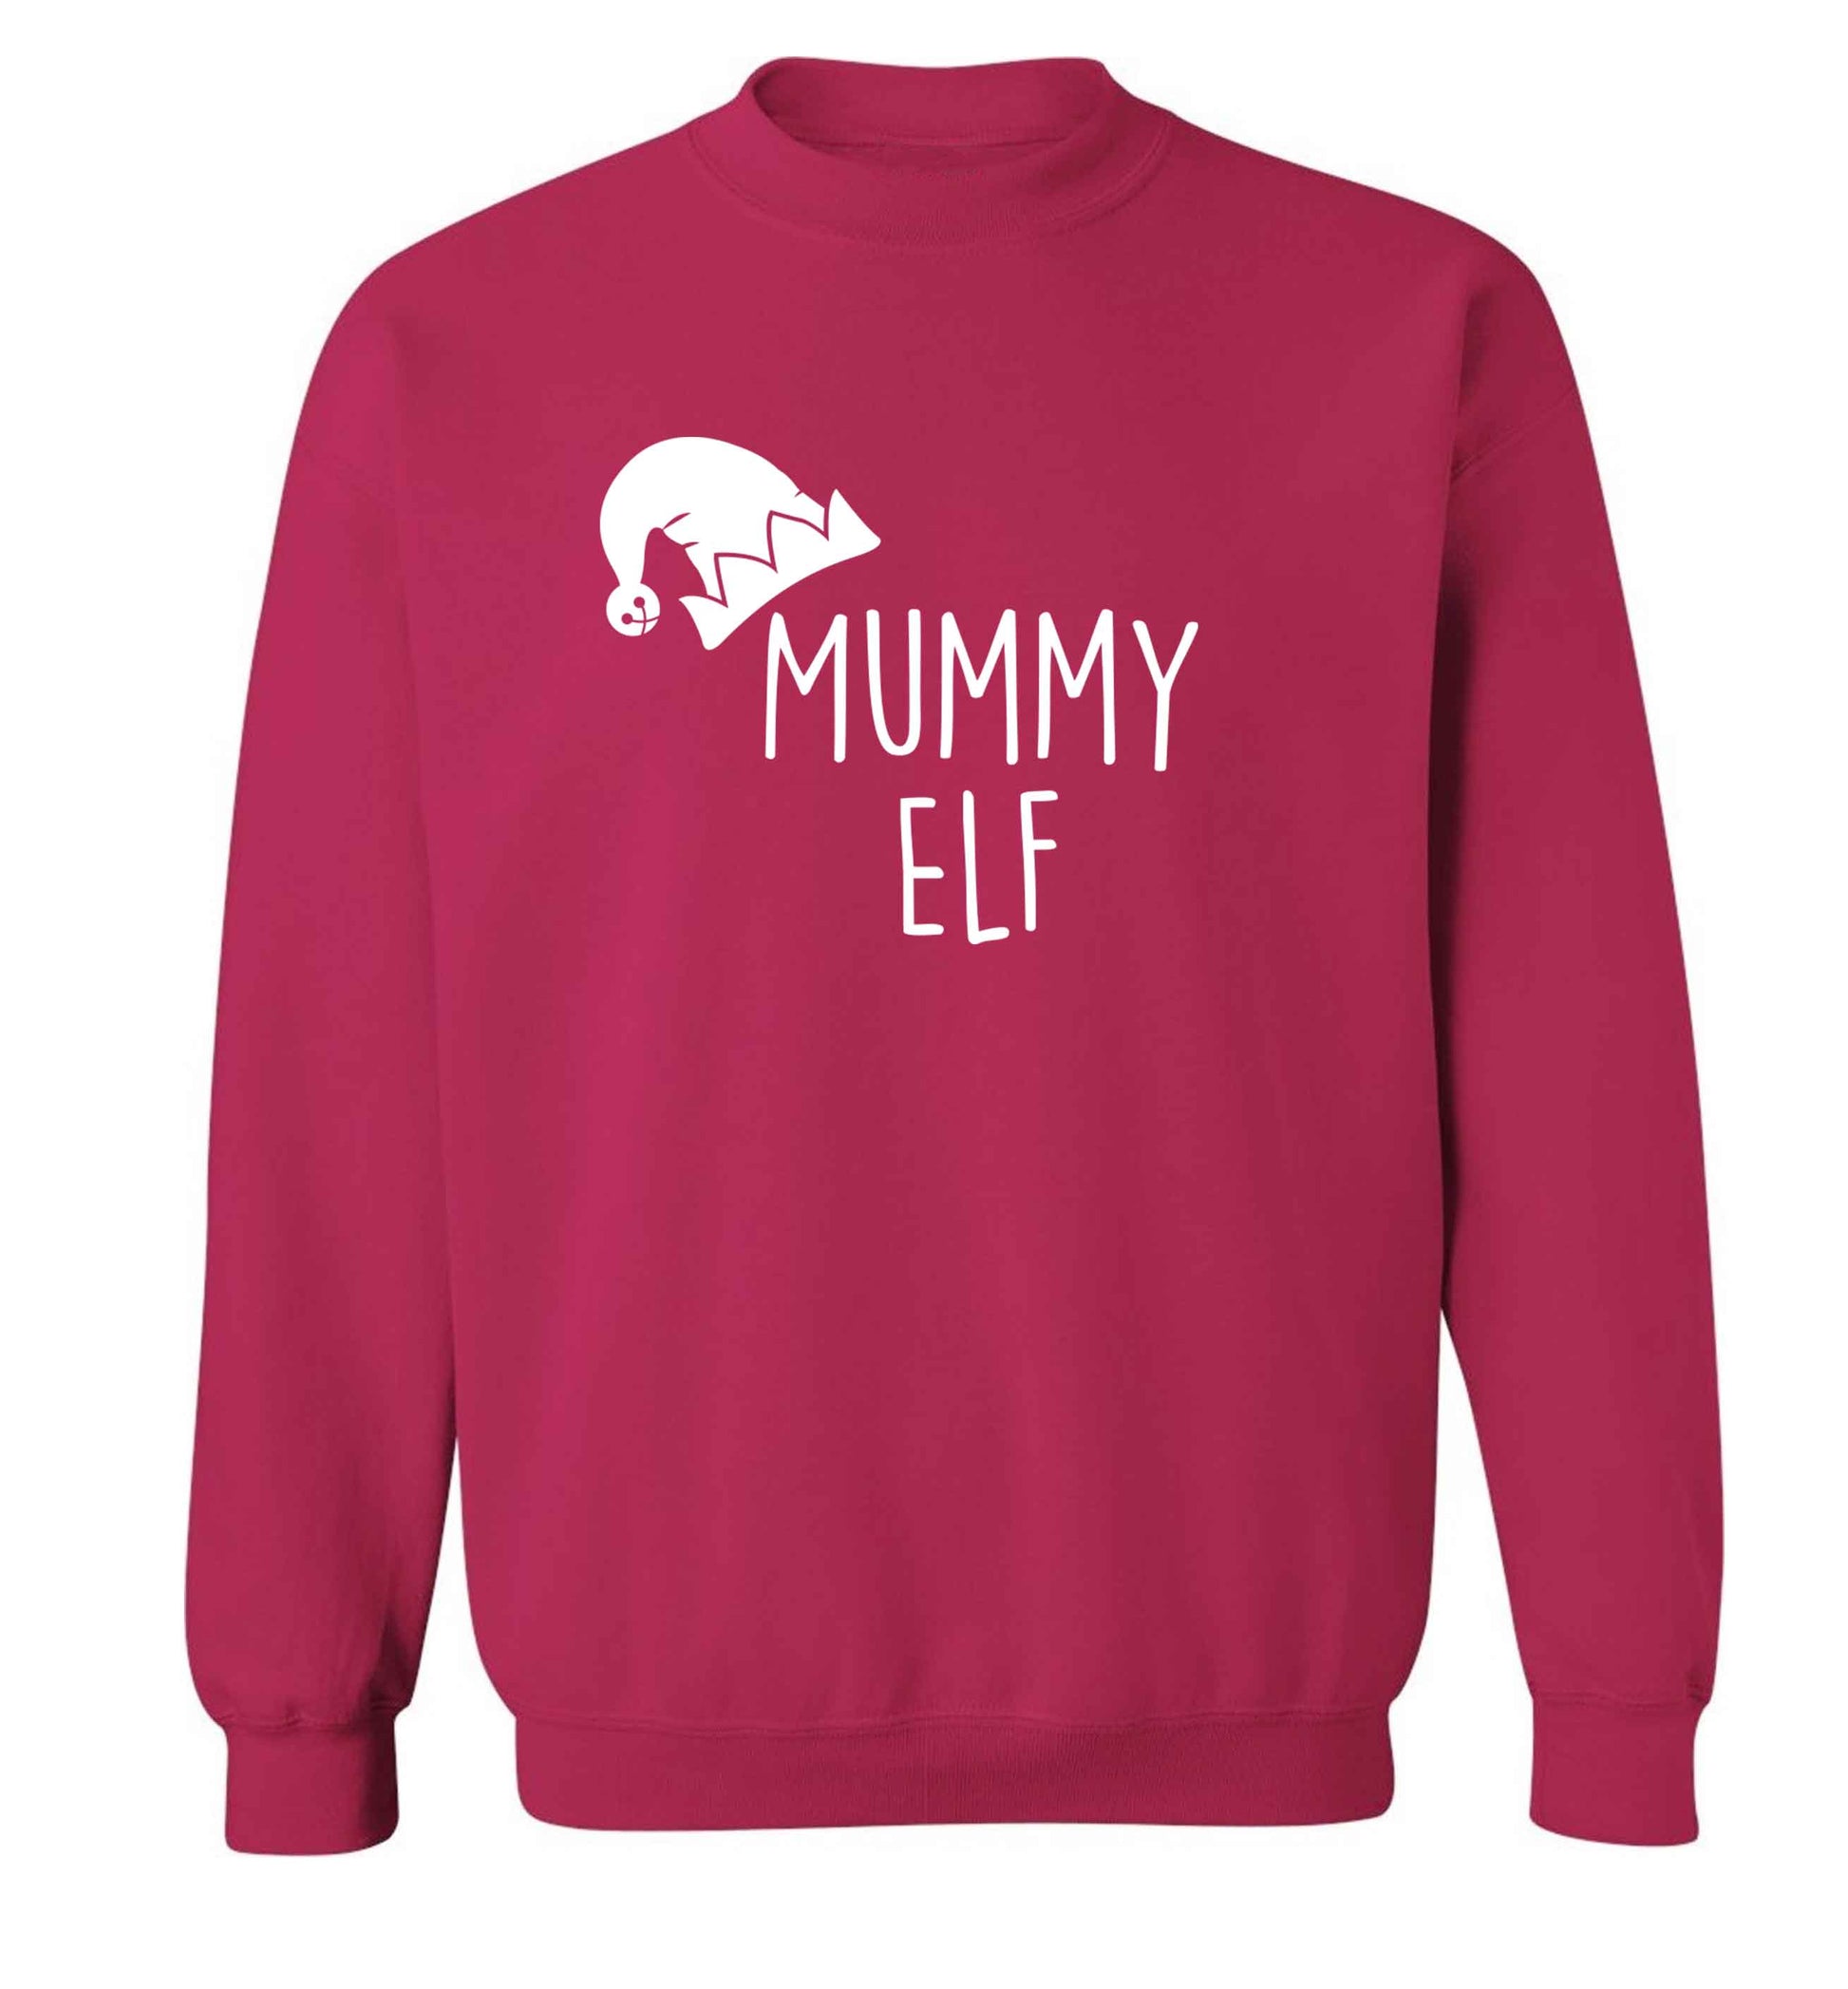 Mummy elf adult's unisex pink sweater 2XL